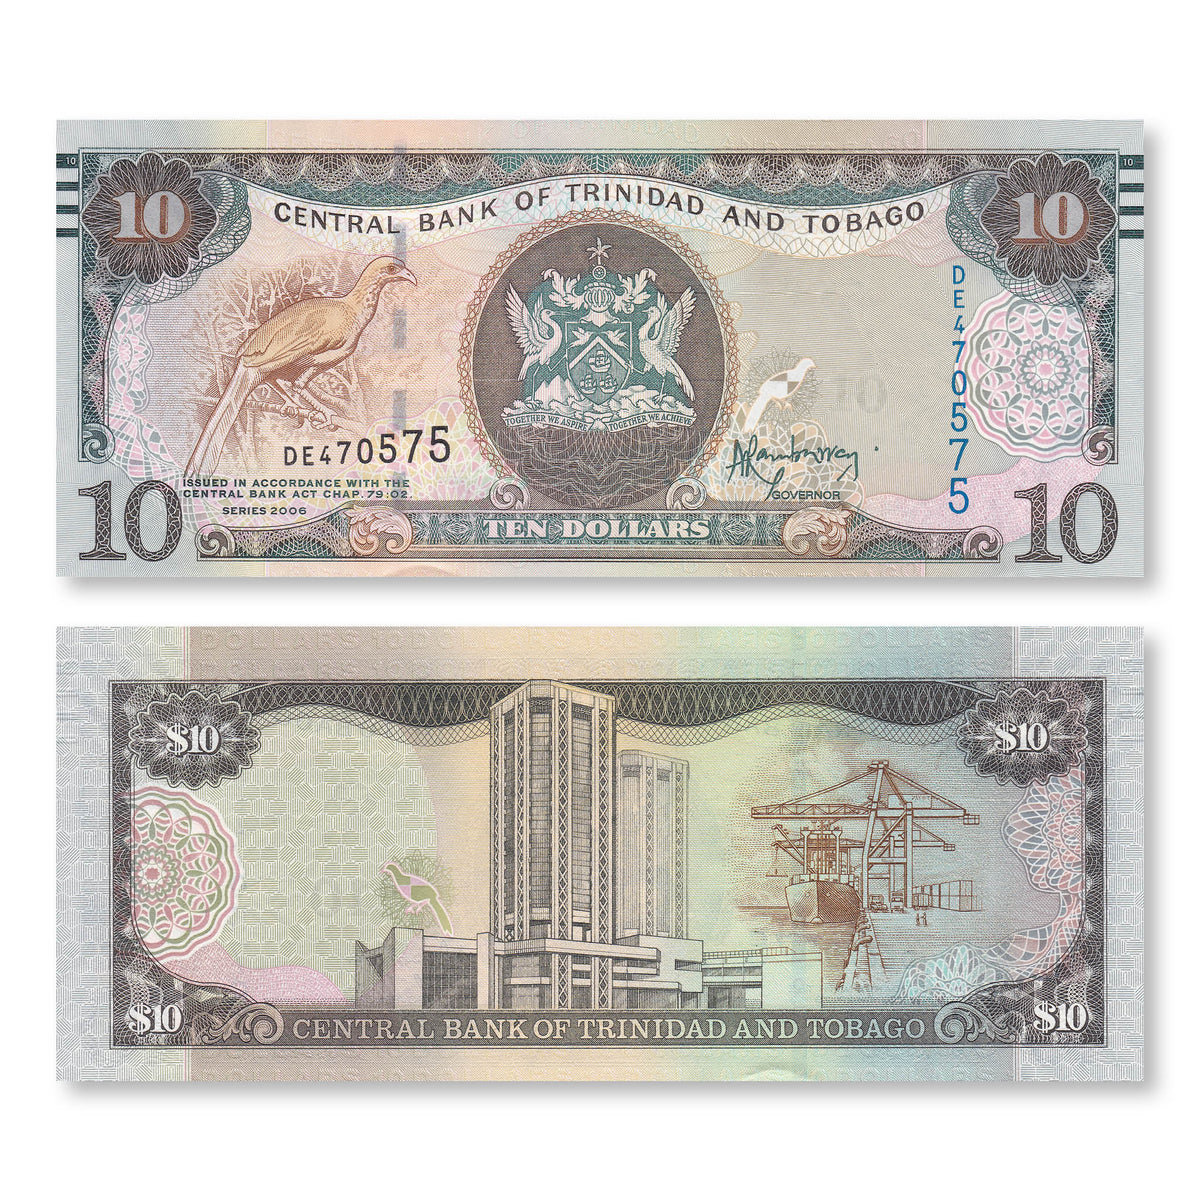 Trinidad & Tobago 10 Dollars, 2006 (2013), B230a, P57a, UNC - Robert's World Money - World Banknotes